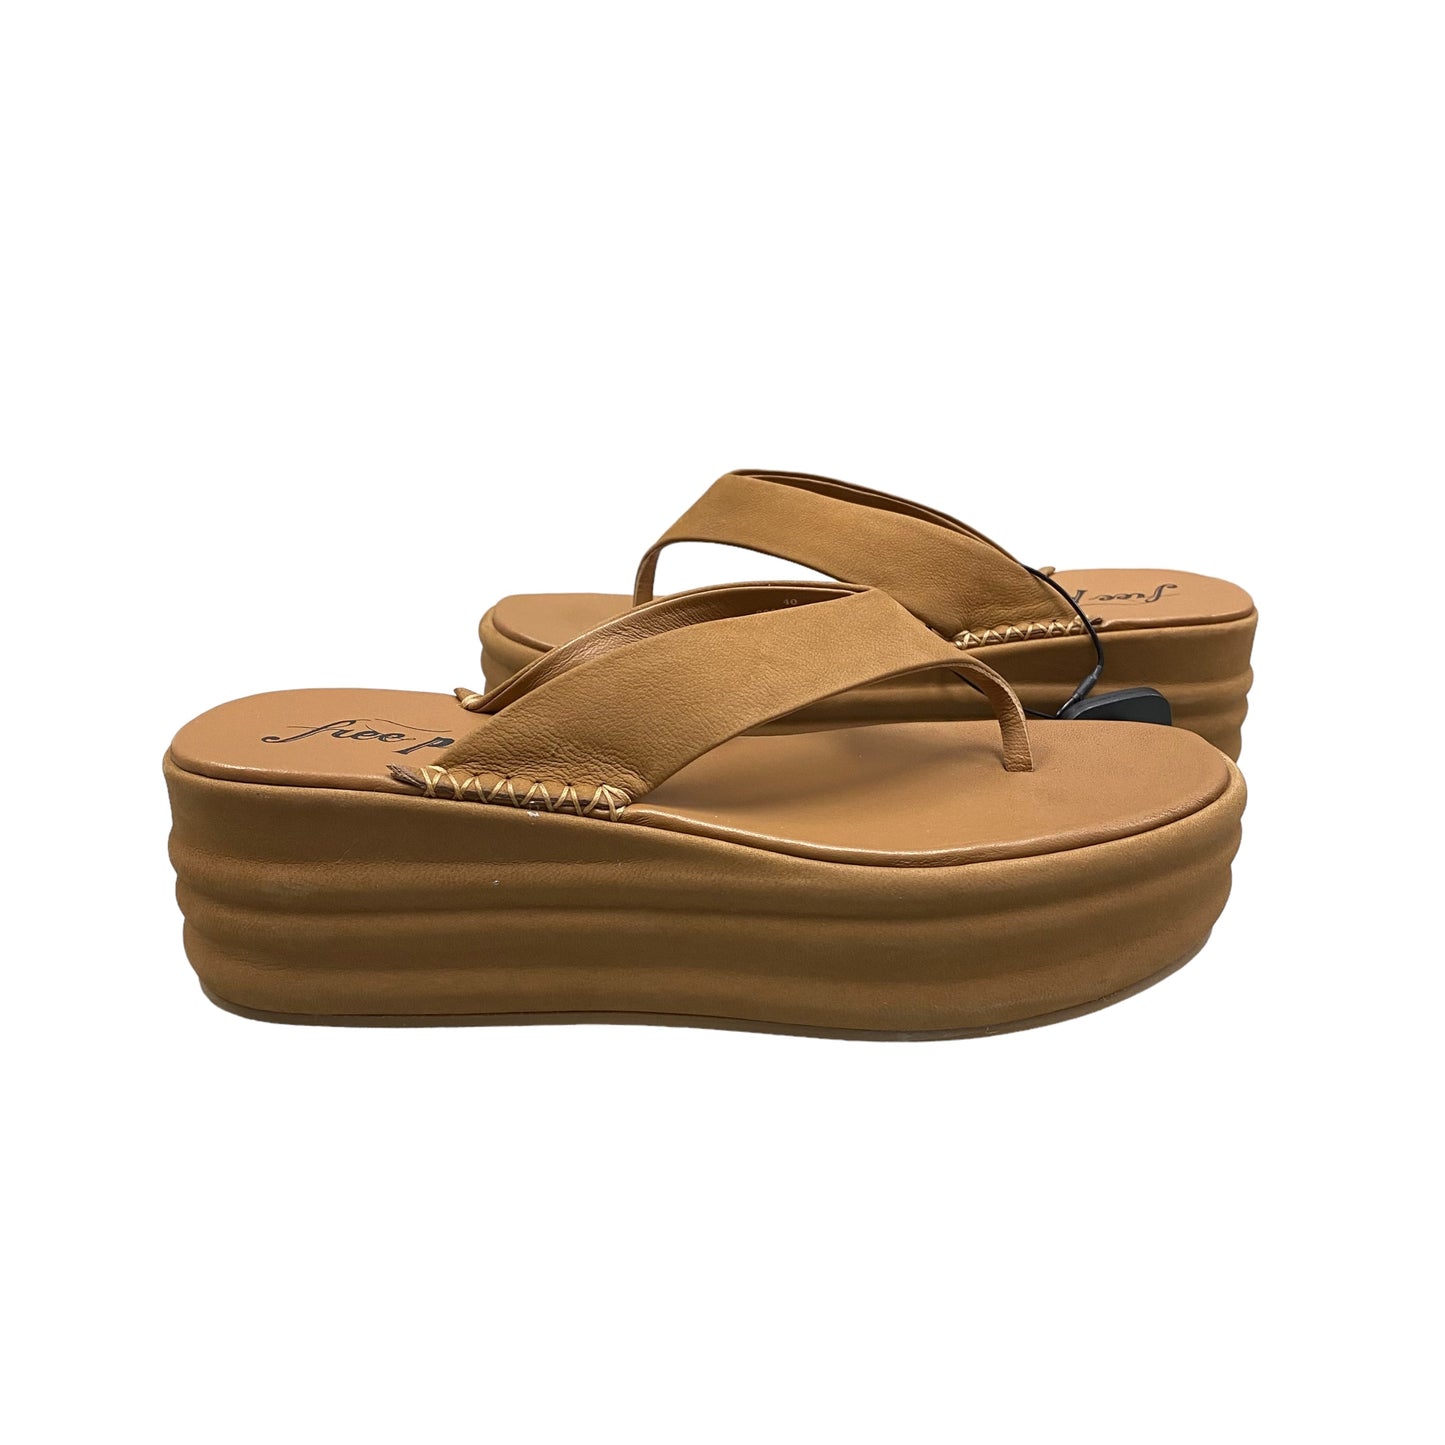 Brown Sandals Heels Platform Free People, Size 10